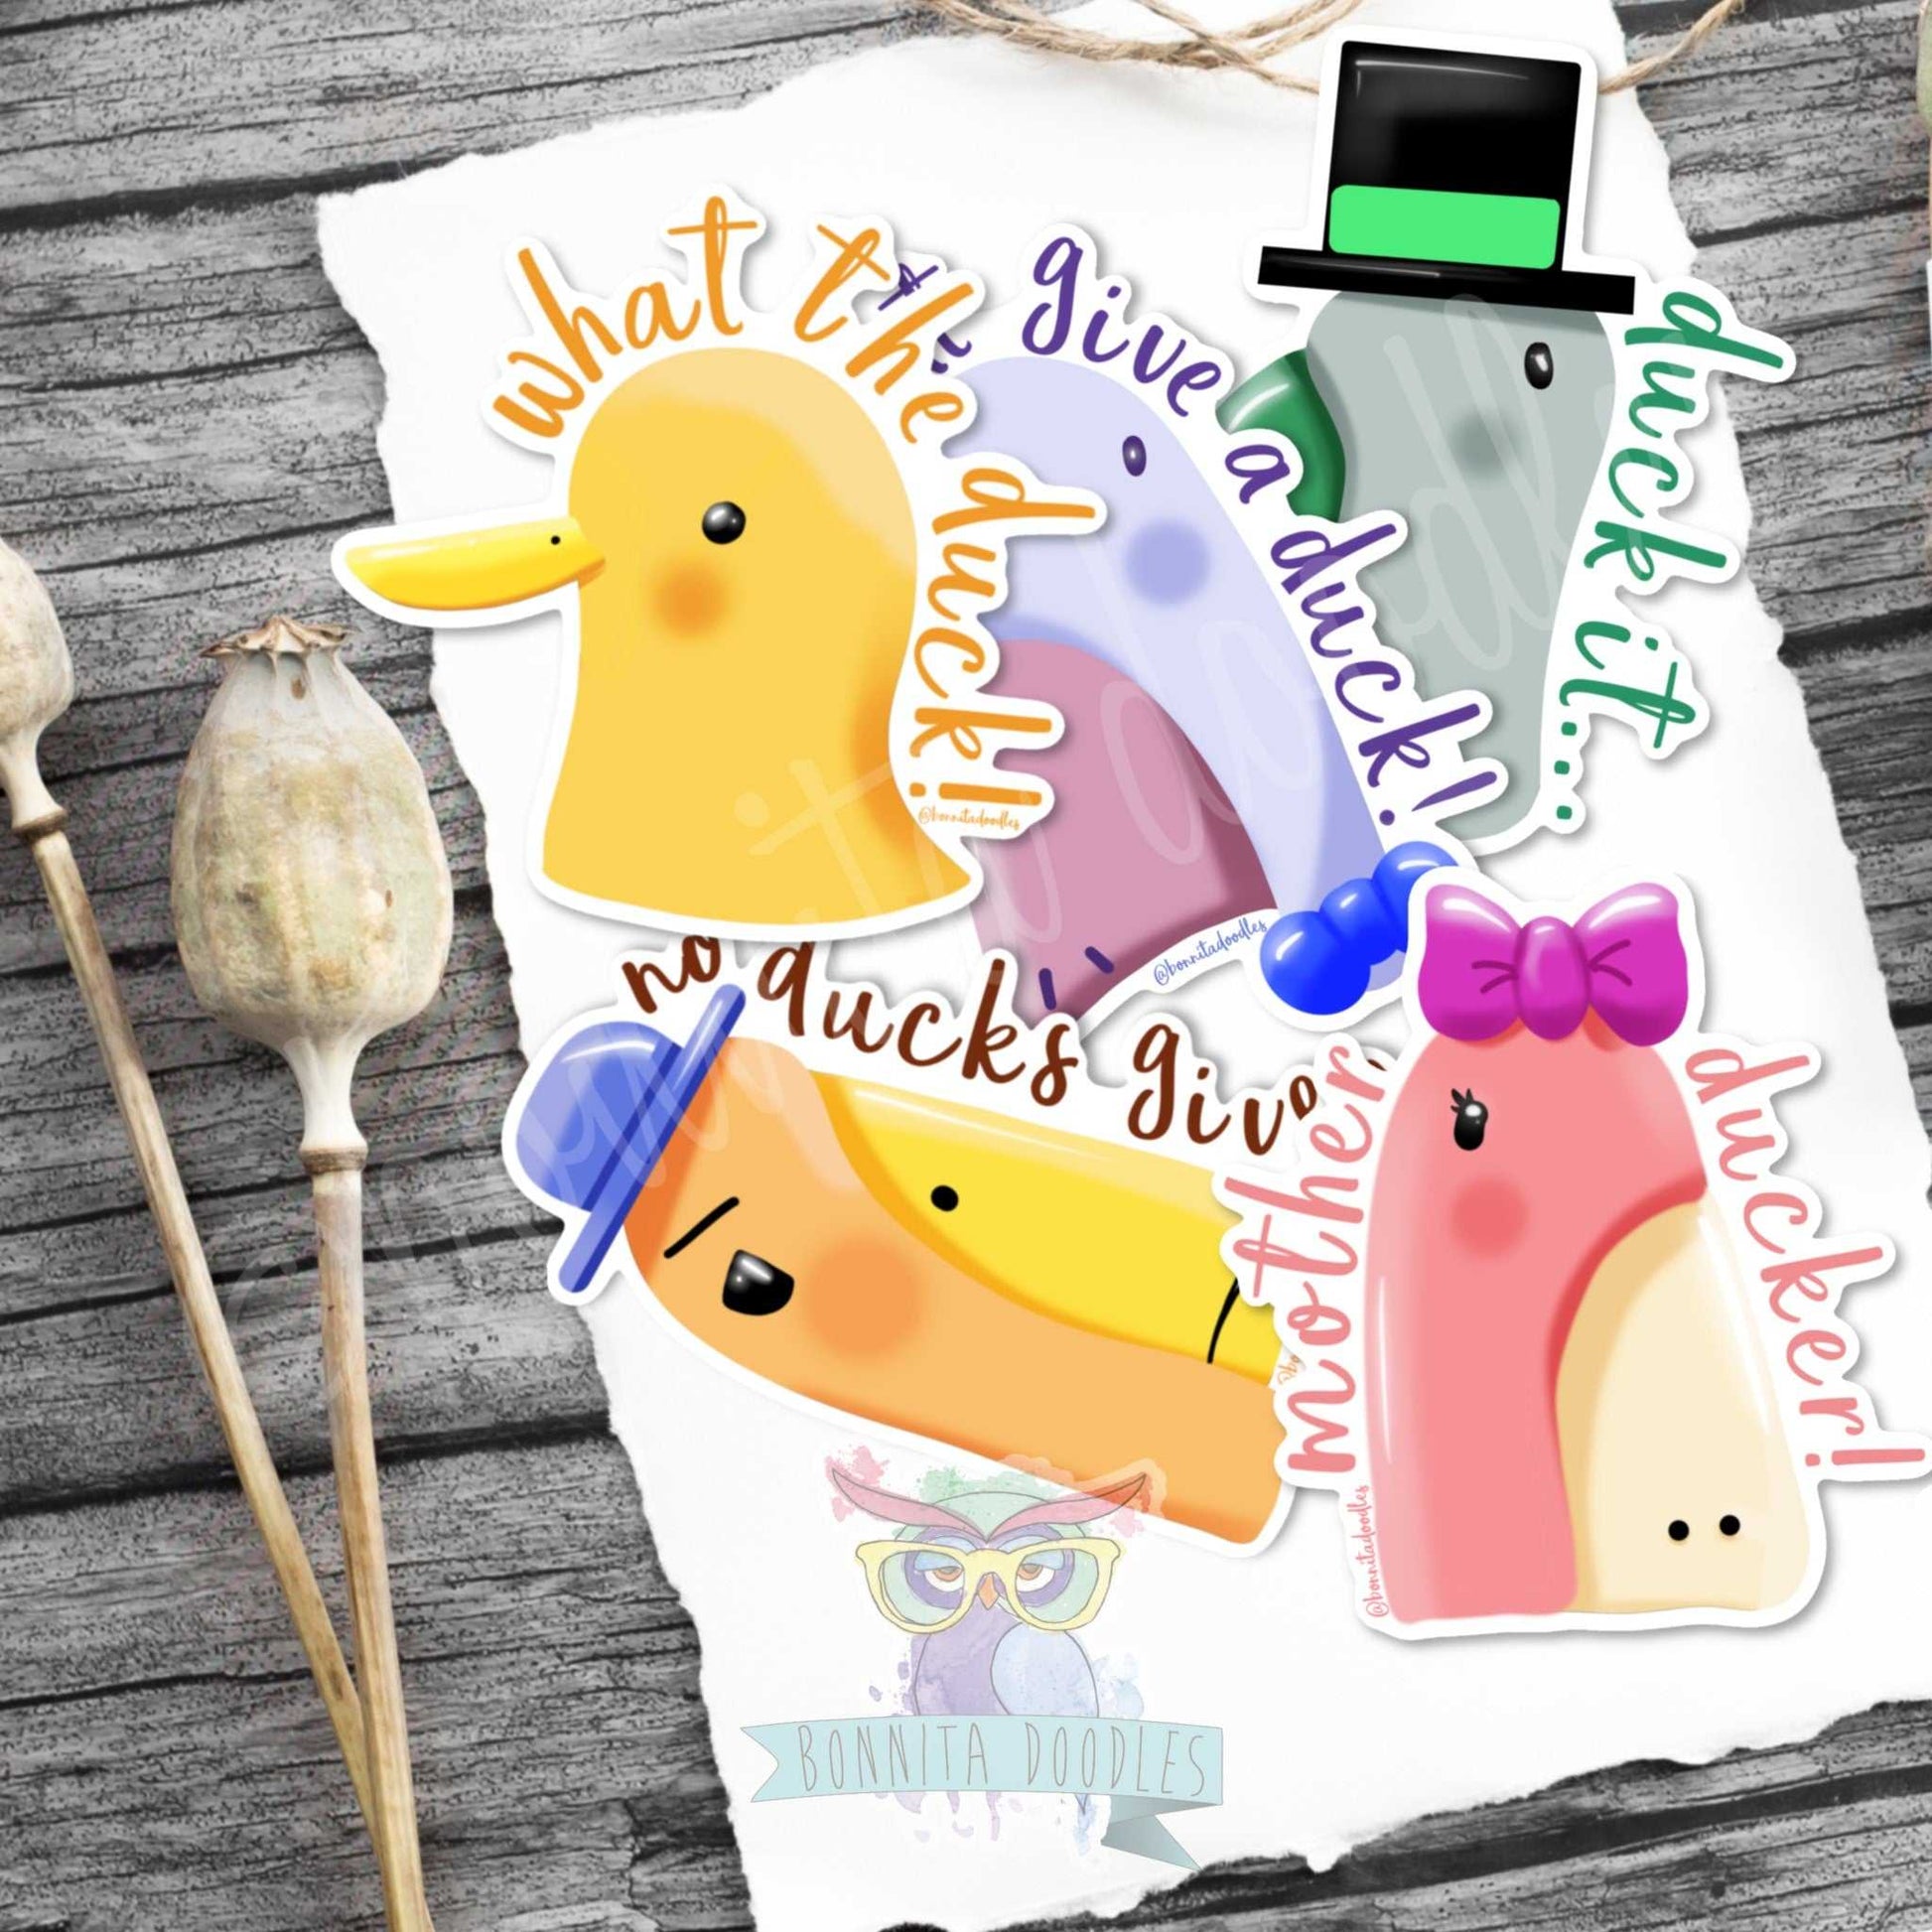 Don’t give a duck sticker pack - Please read description.